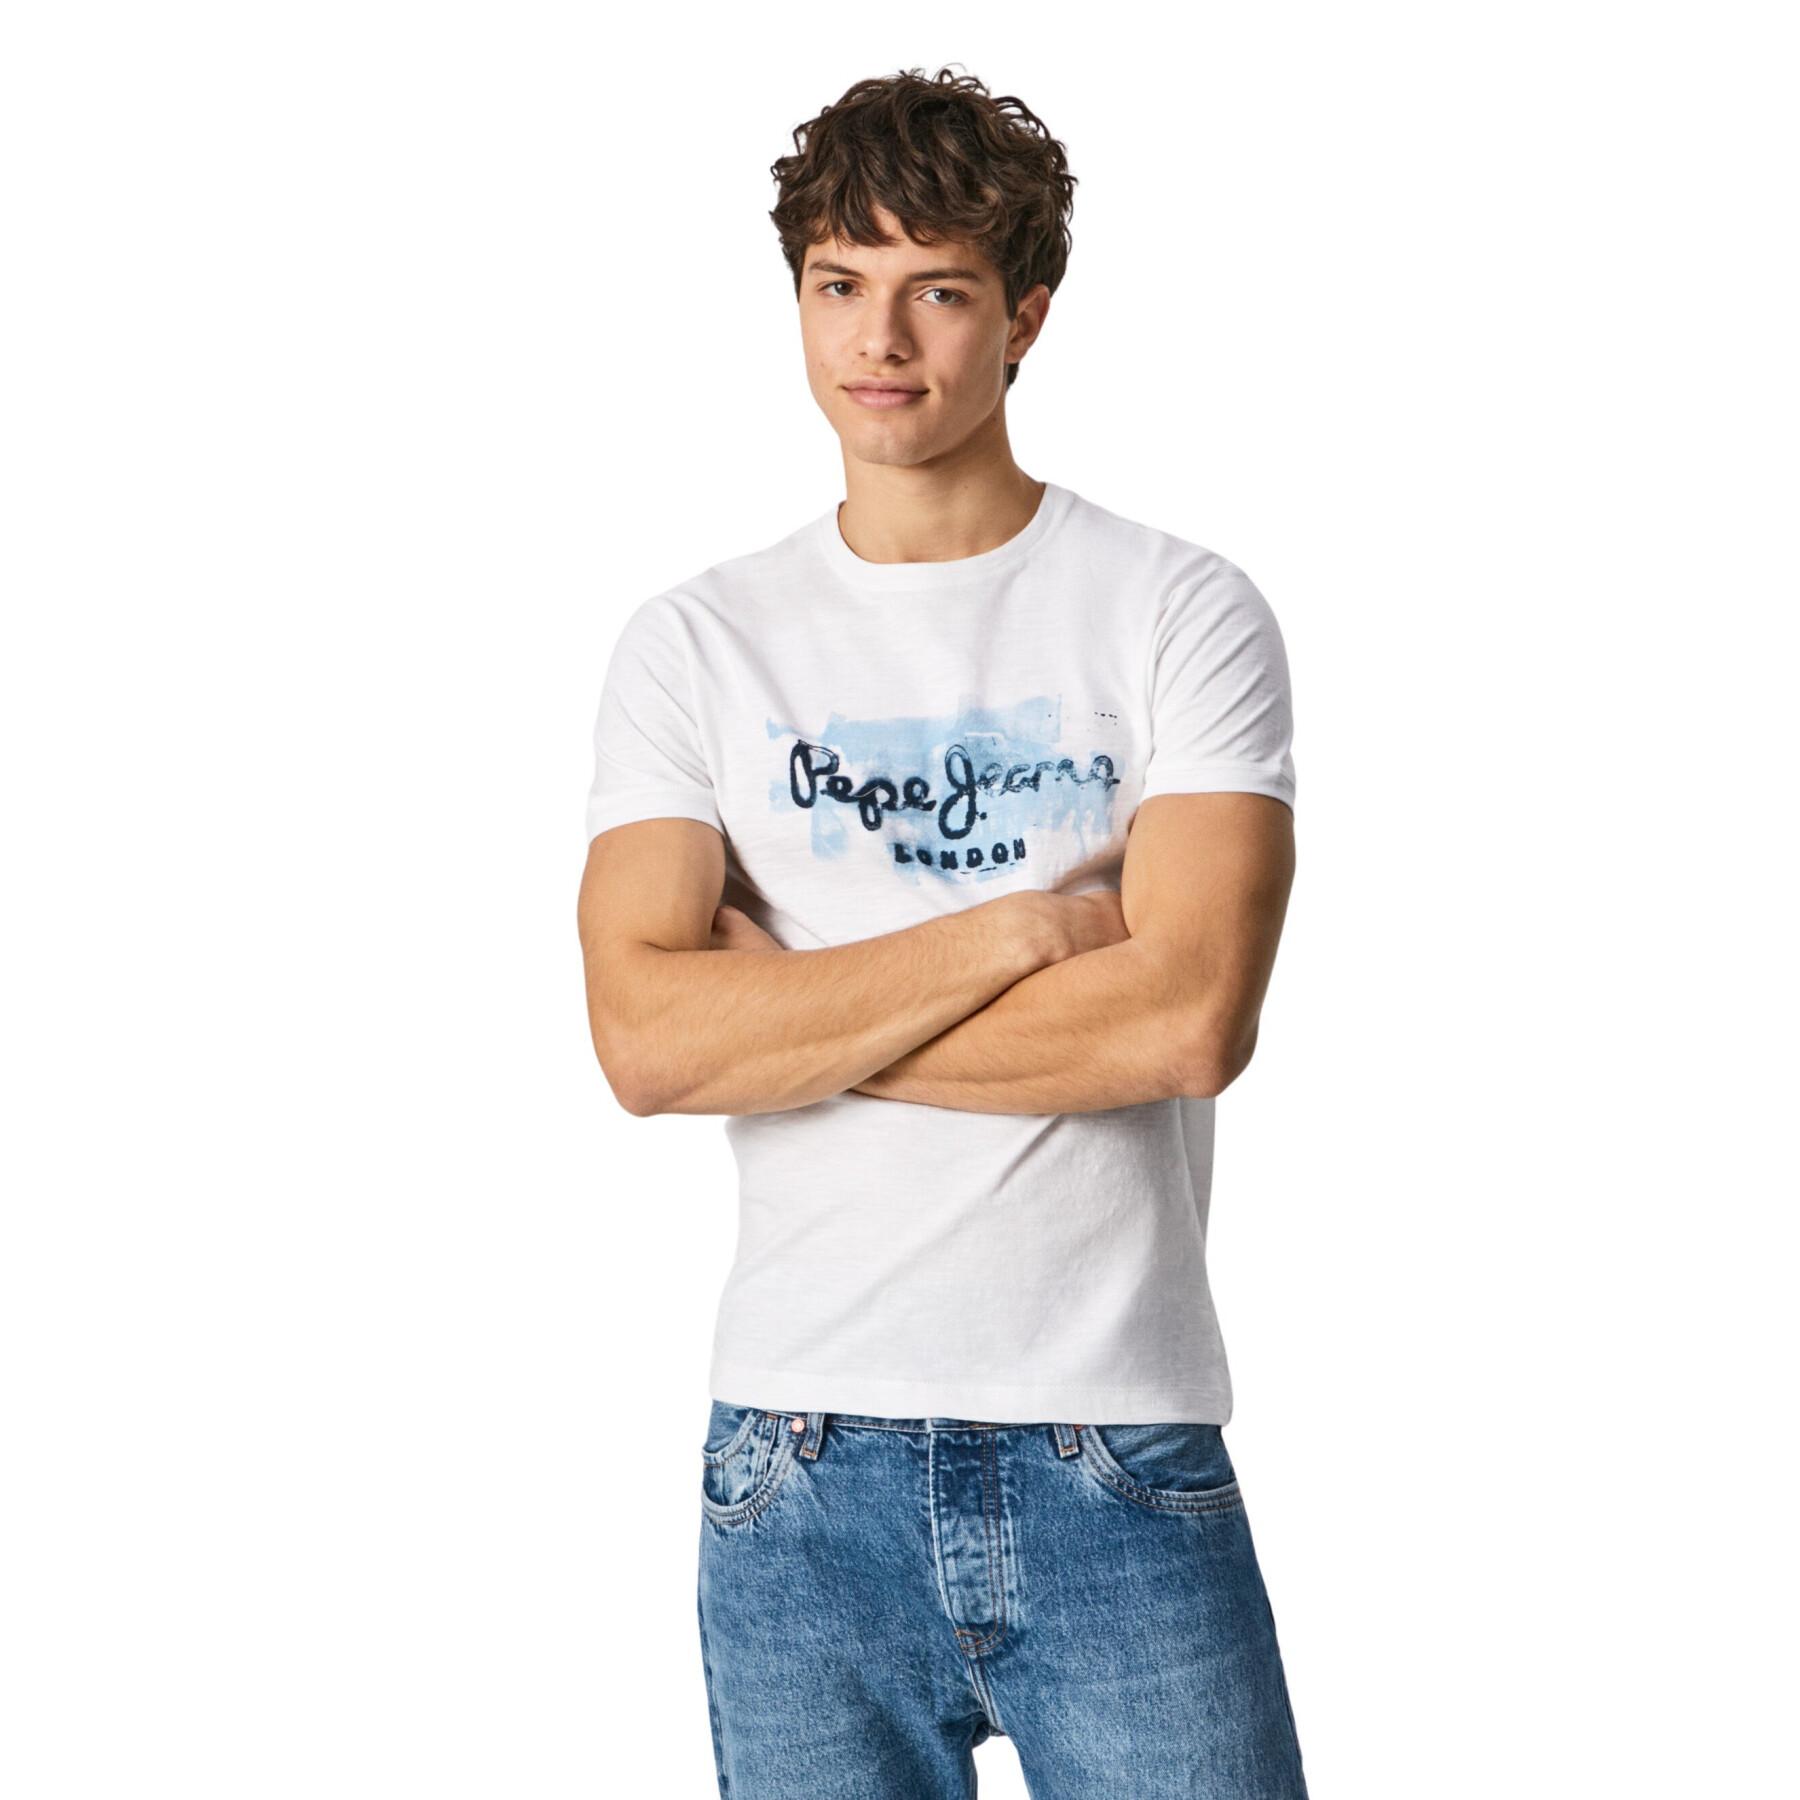 T-shirt Pepe Jeans Golders